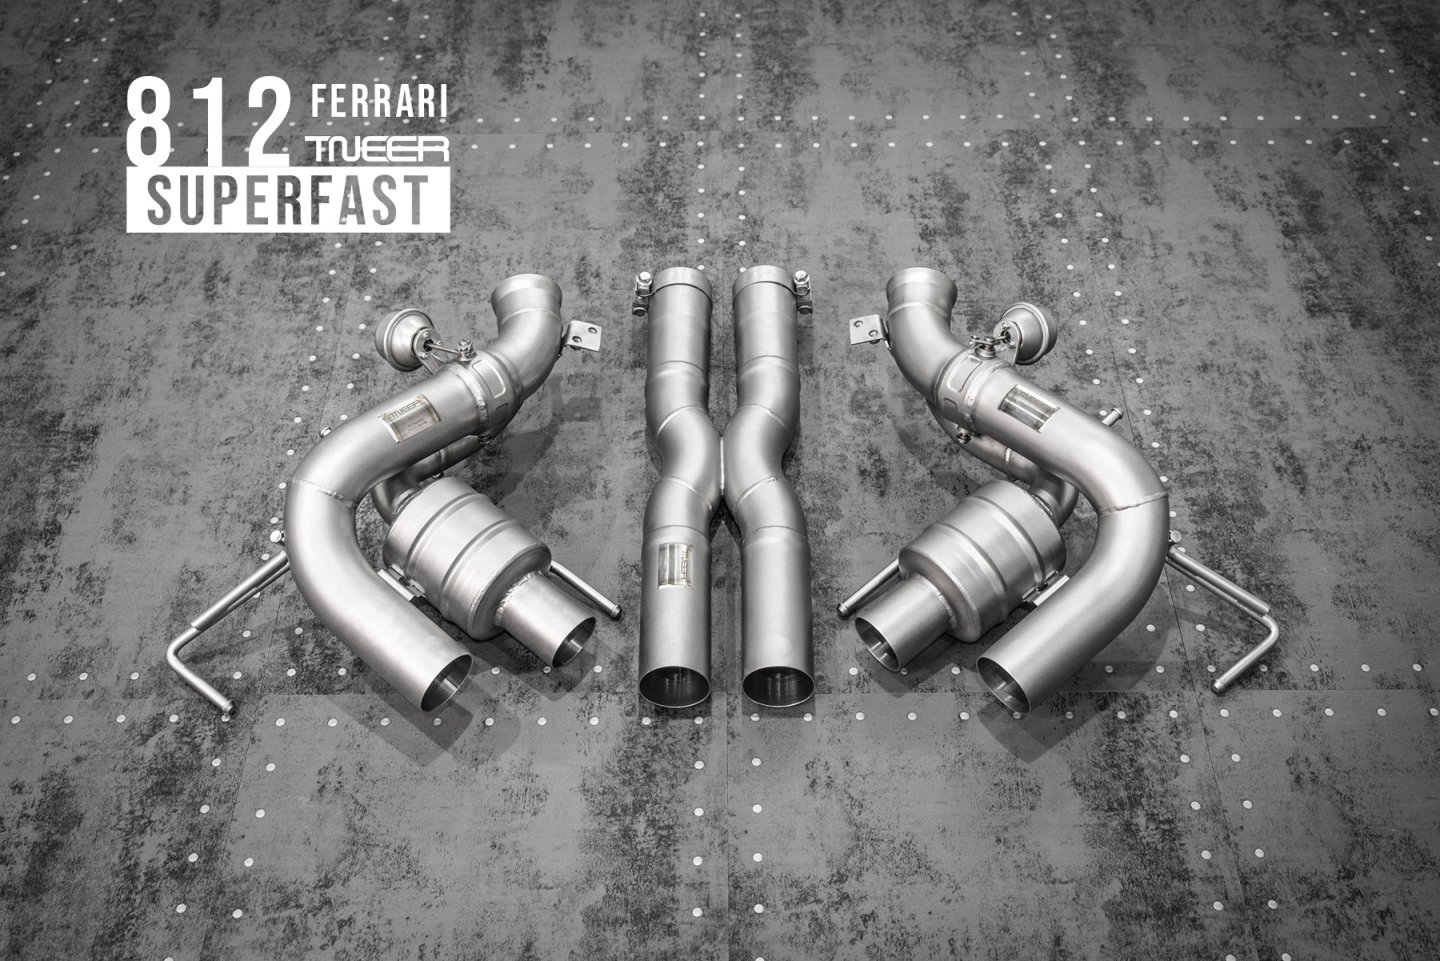 Ferrari 812 Superfast / GTS TNEER Exhaust System (Valvetronic)